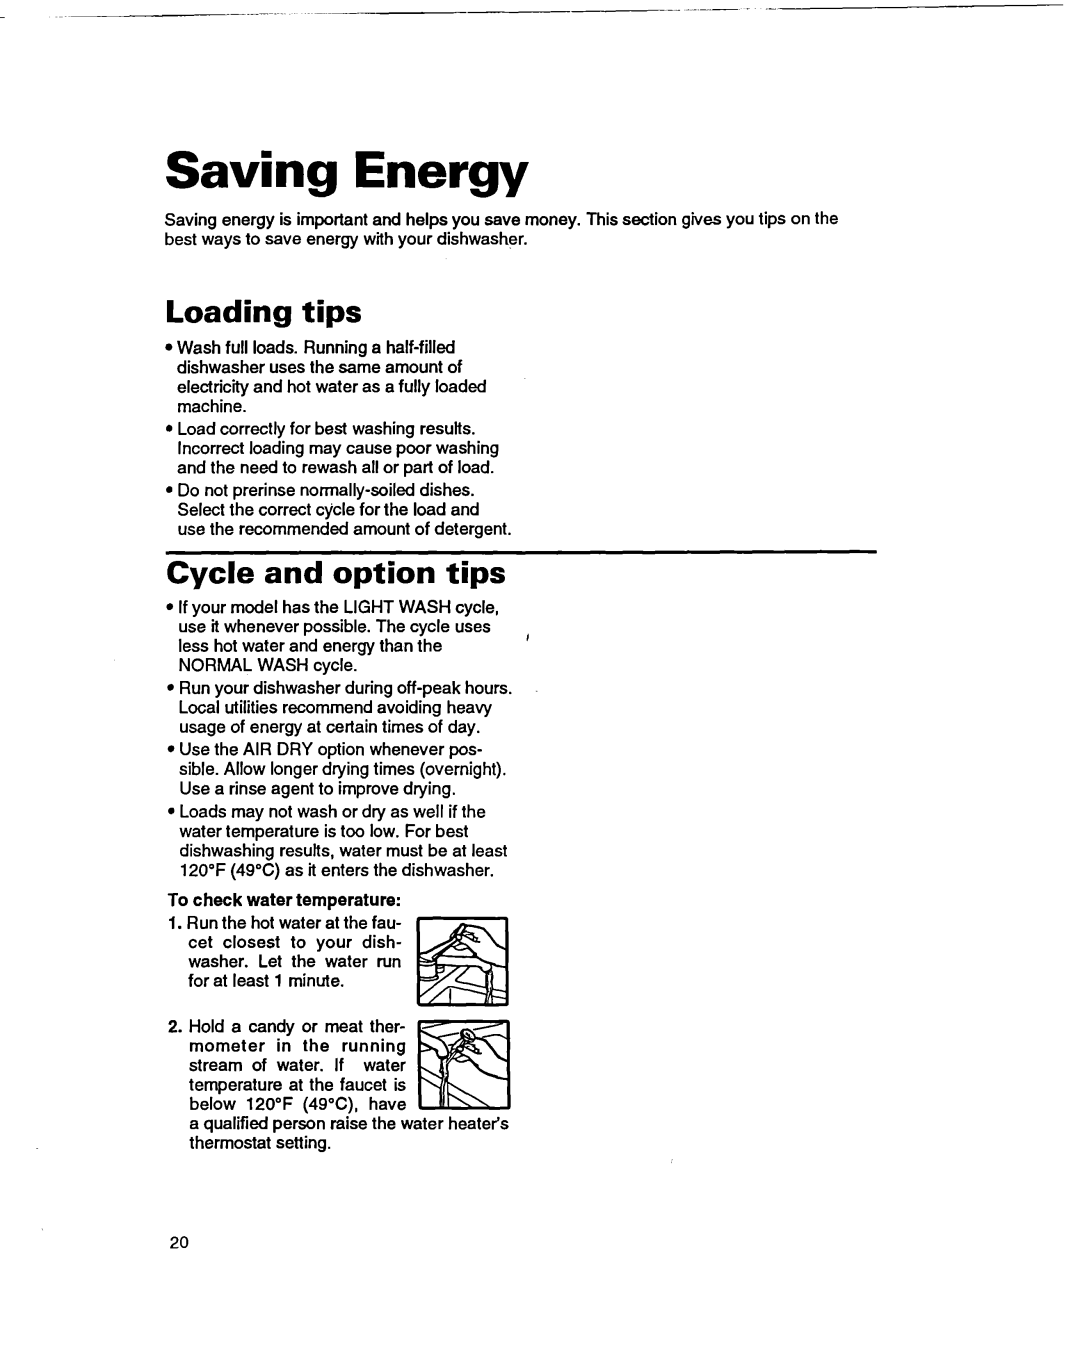 Whirlpool 400 warranty Saving Energy, Loading tips, Cycle and option tips 